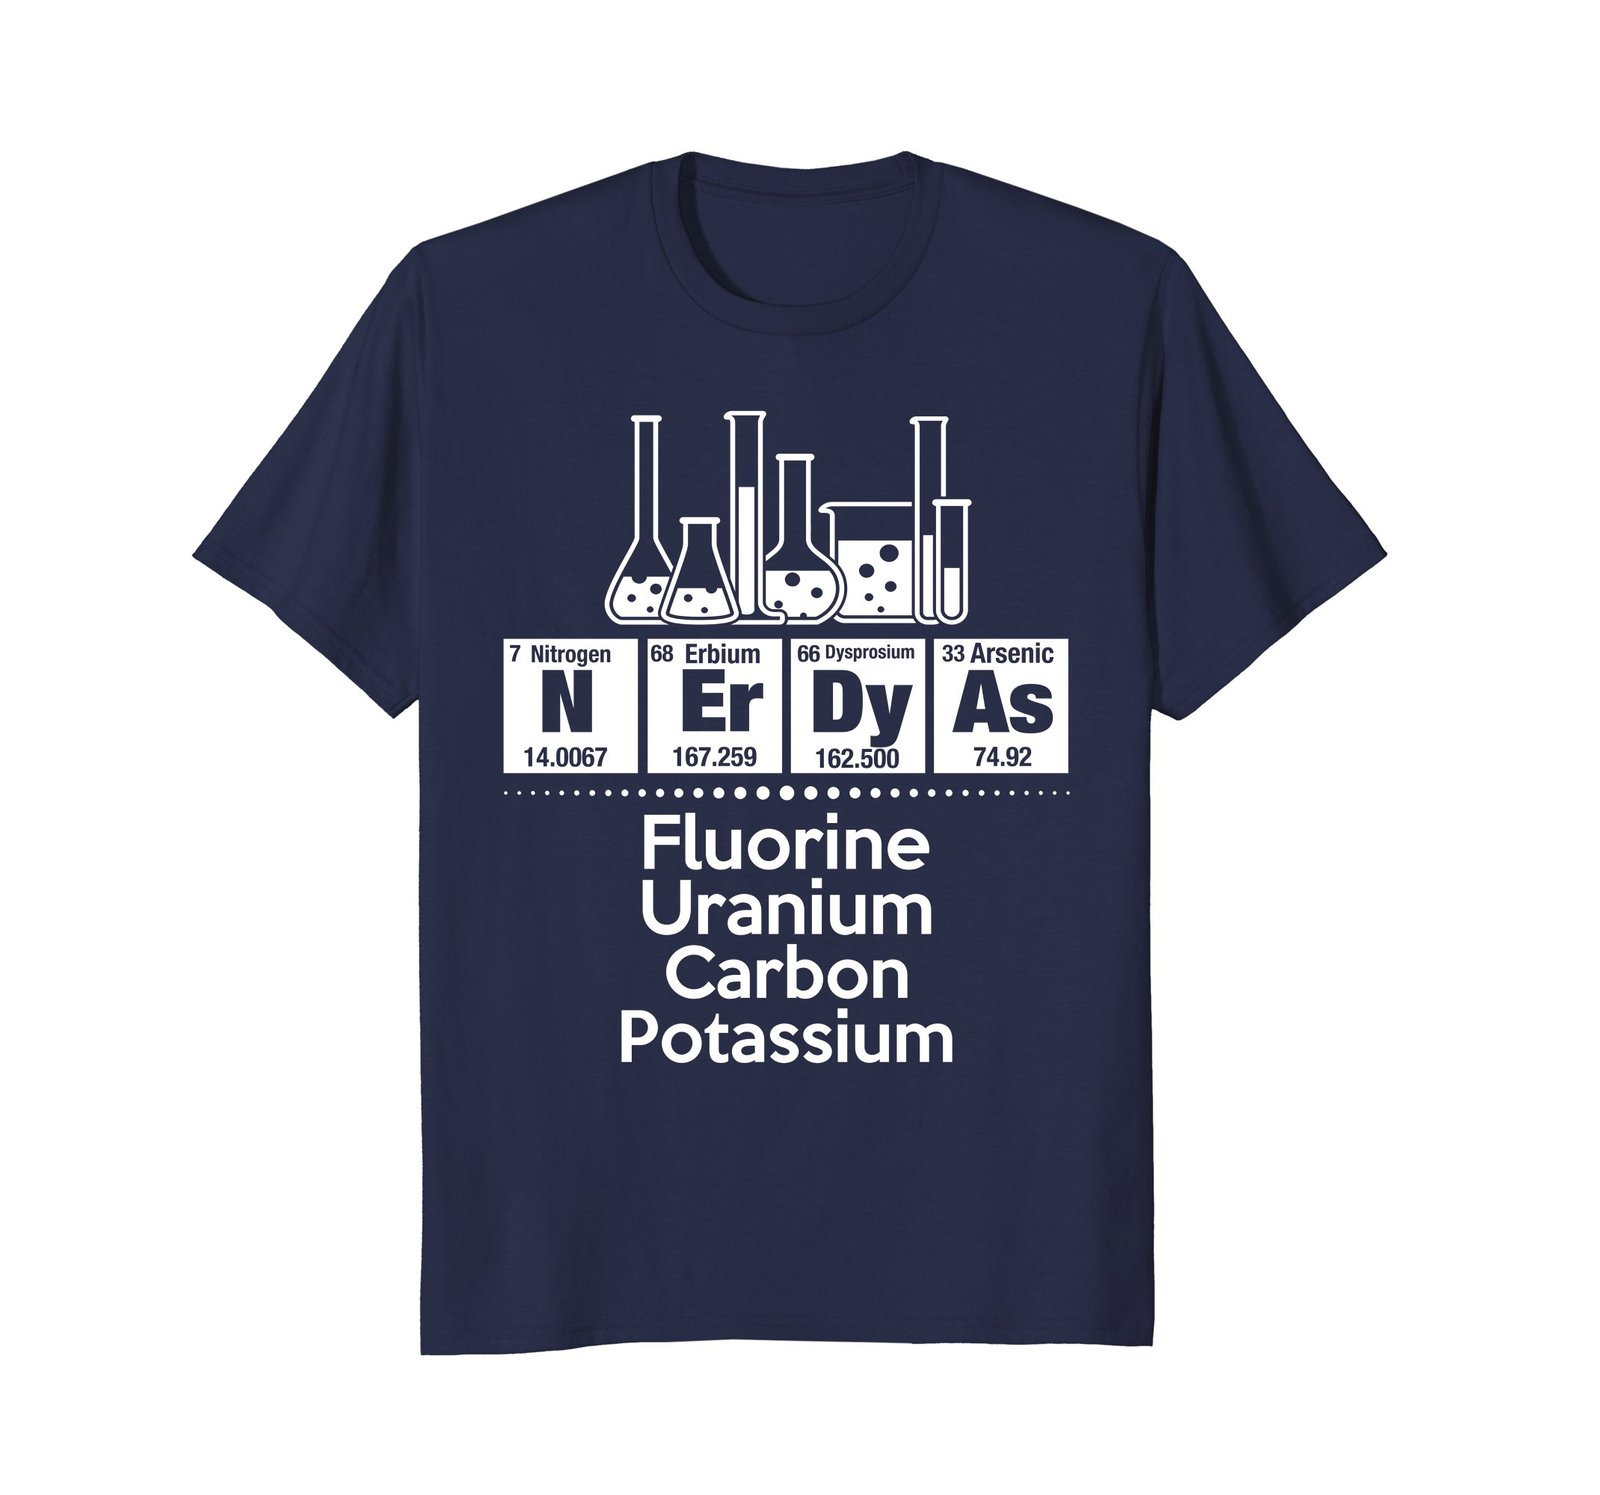 Funny Shirts - Nerdy As Fluorine Uranium Carbon Potassium - Science T-shirt Men